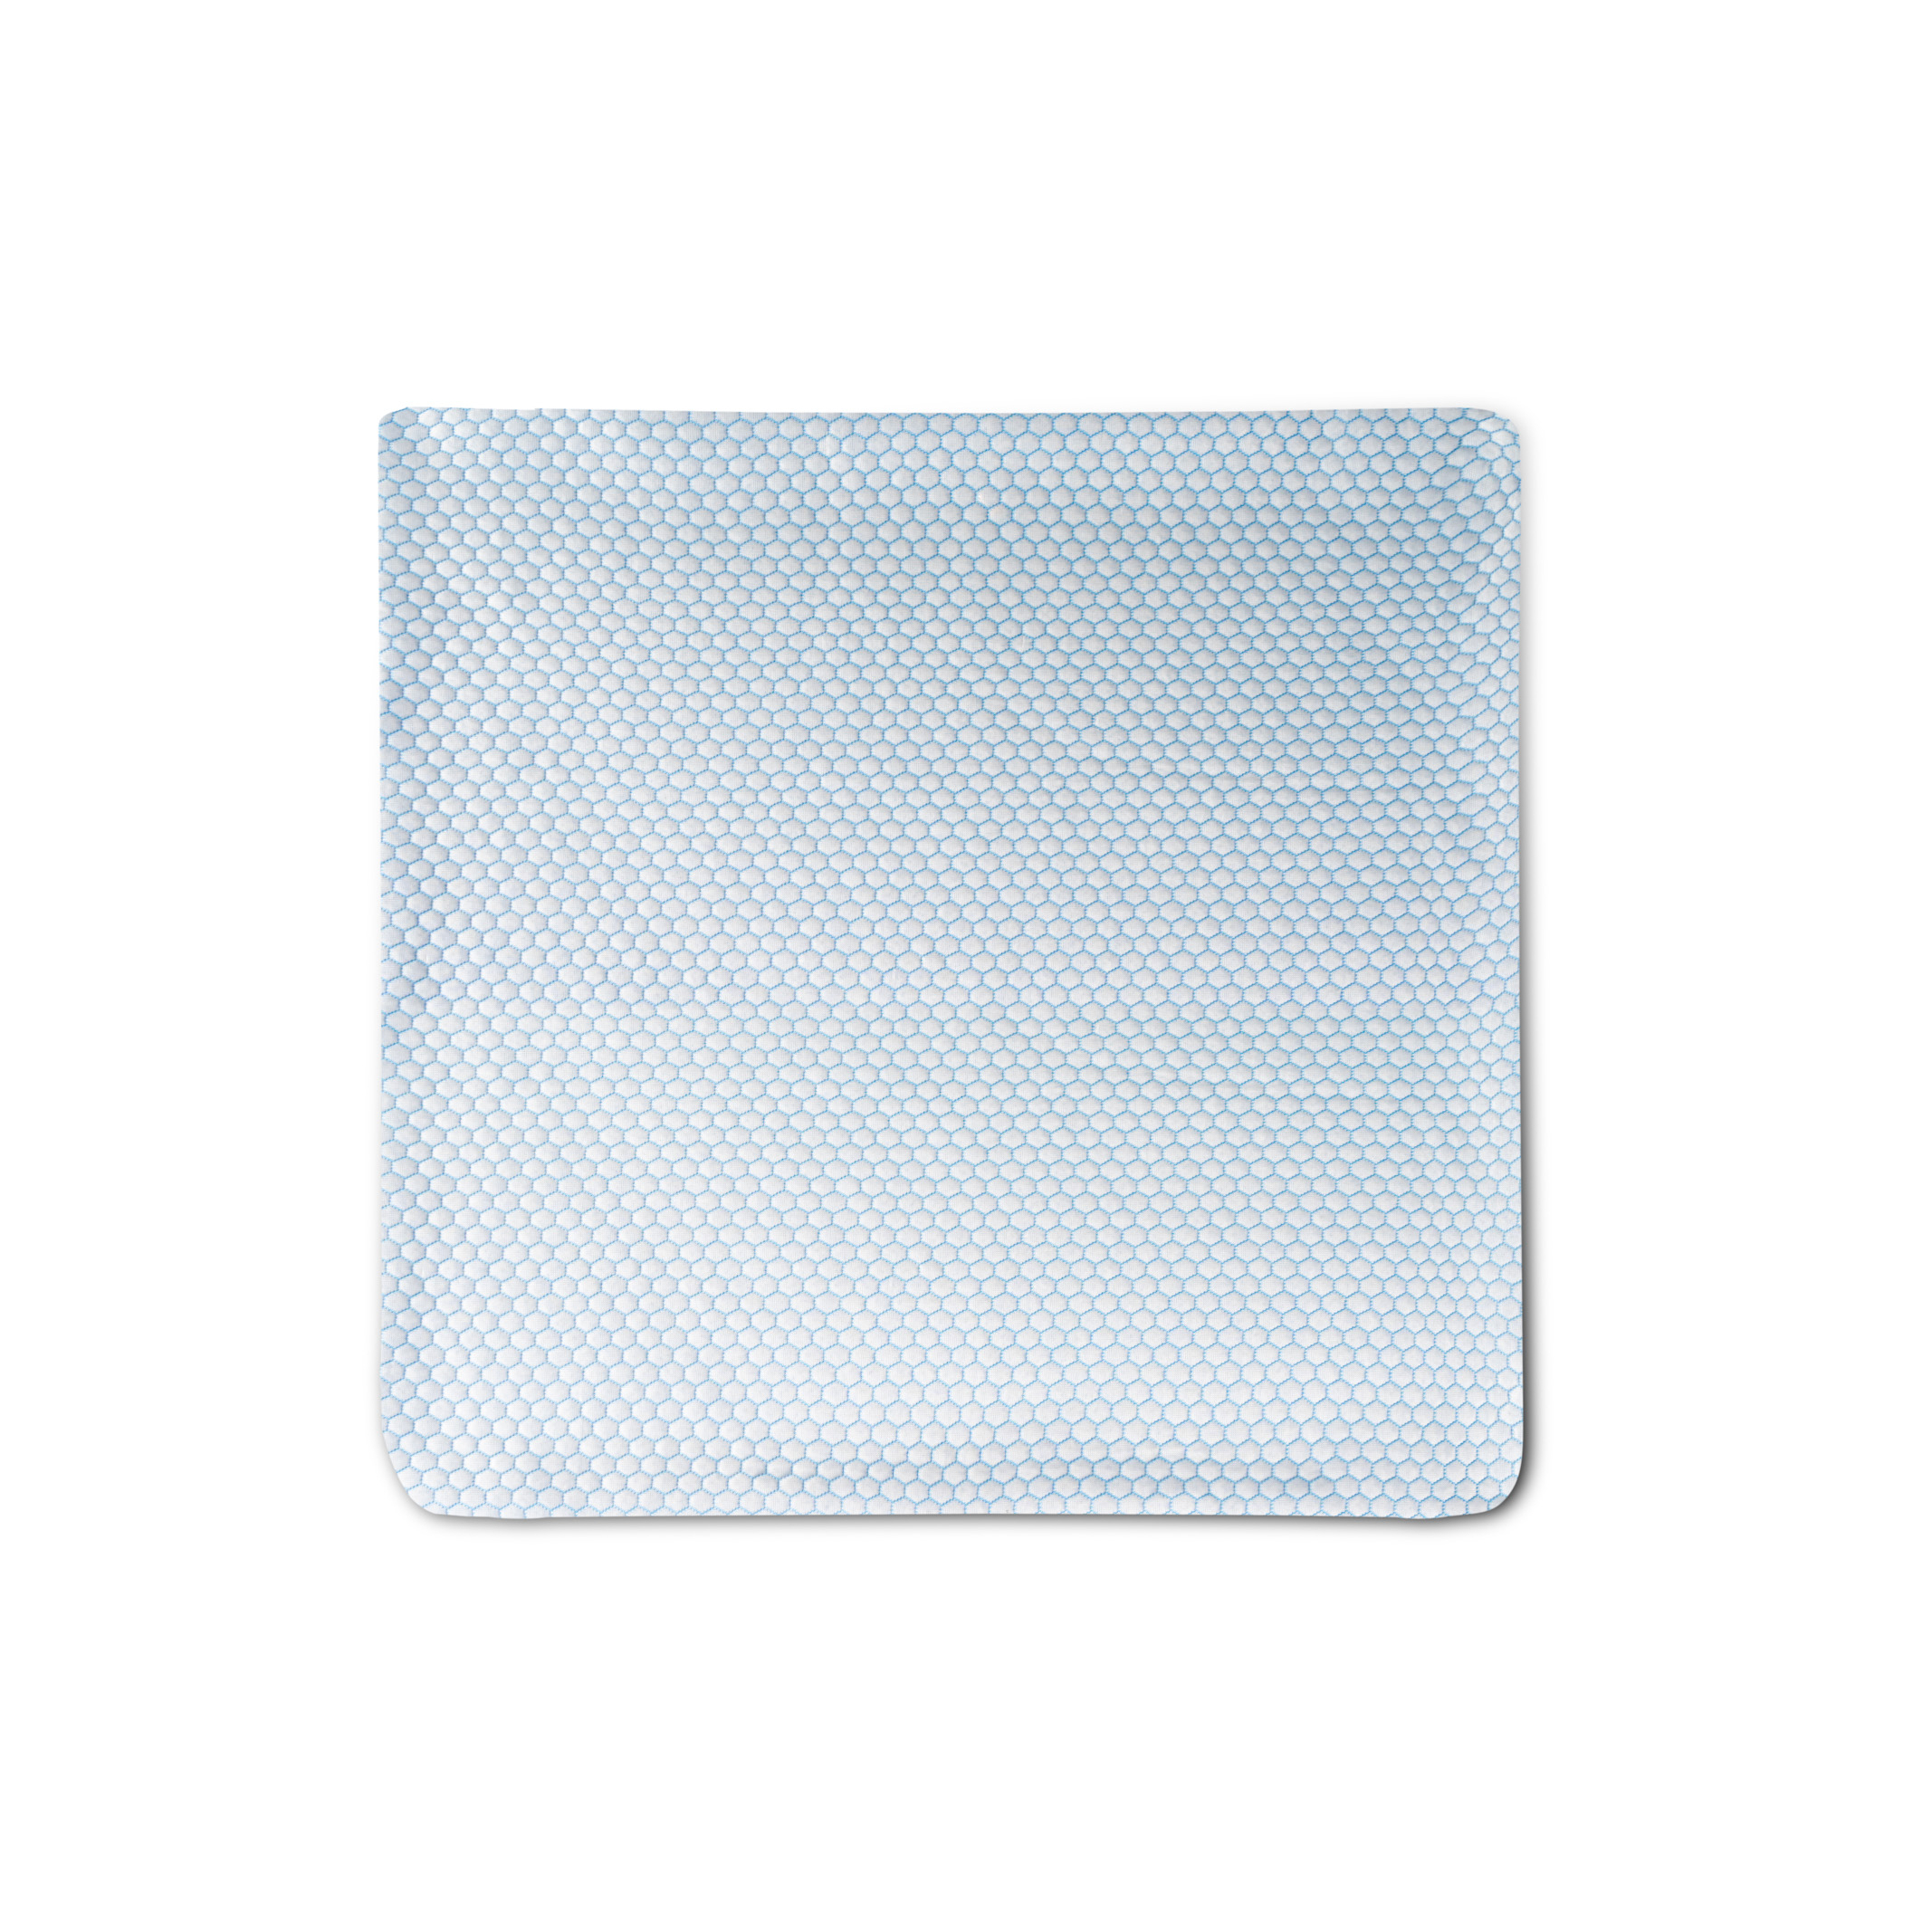 фото Защитный чехол для подушки medsleep fresh sleep белый с голубым 70х70 см